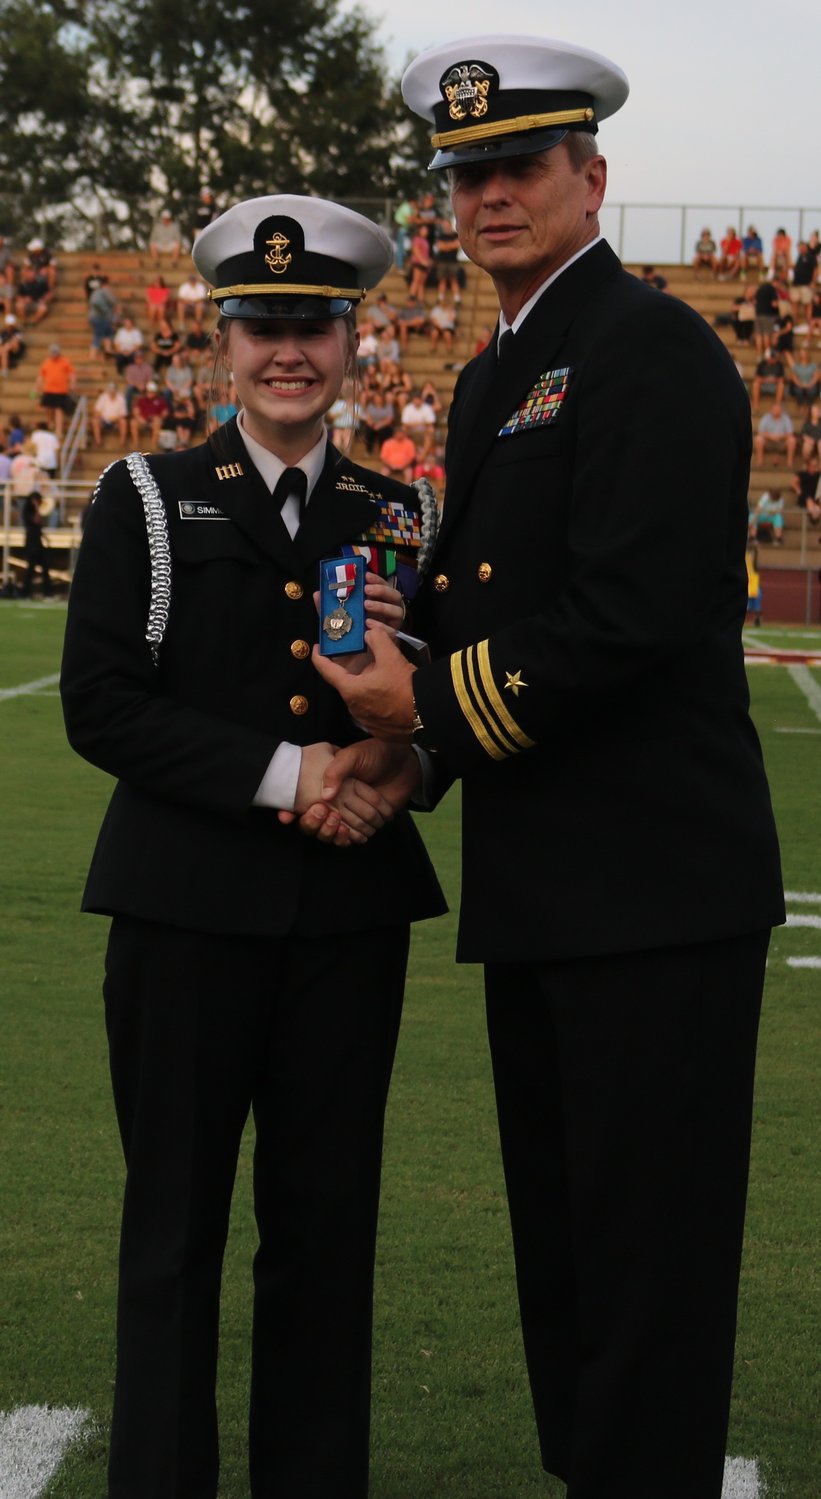 RHS NJROTC Commander Frank Starr presents Cadet Ashlynn Simmons with her award.